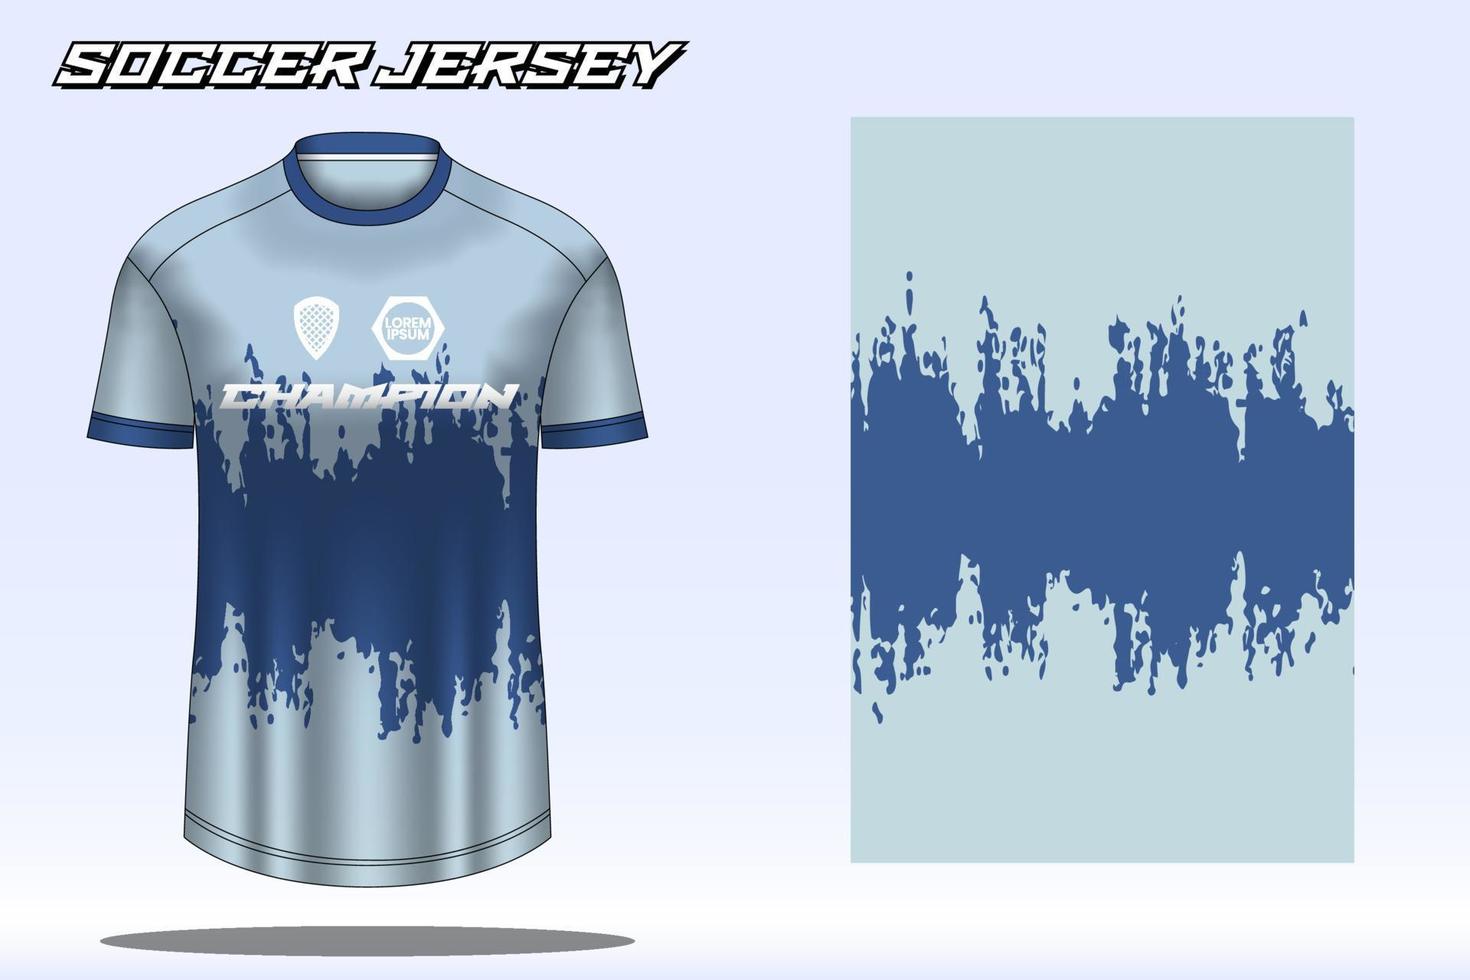 Soccer jersey sport t-shirt design mockup for football club 19 vector